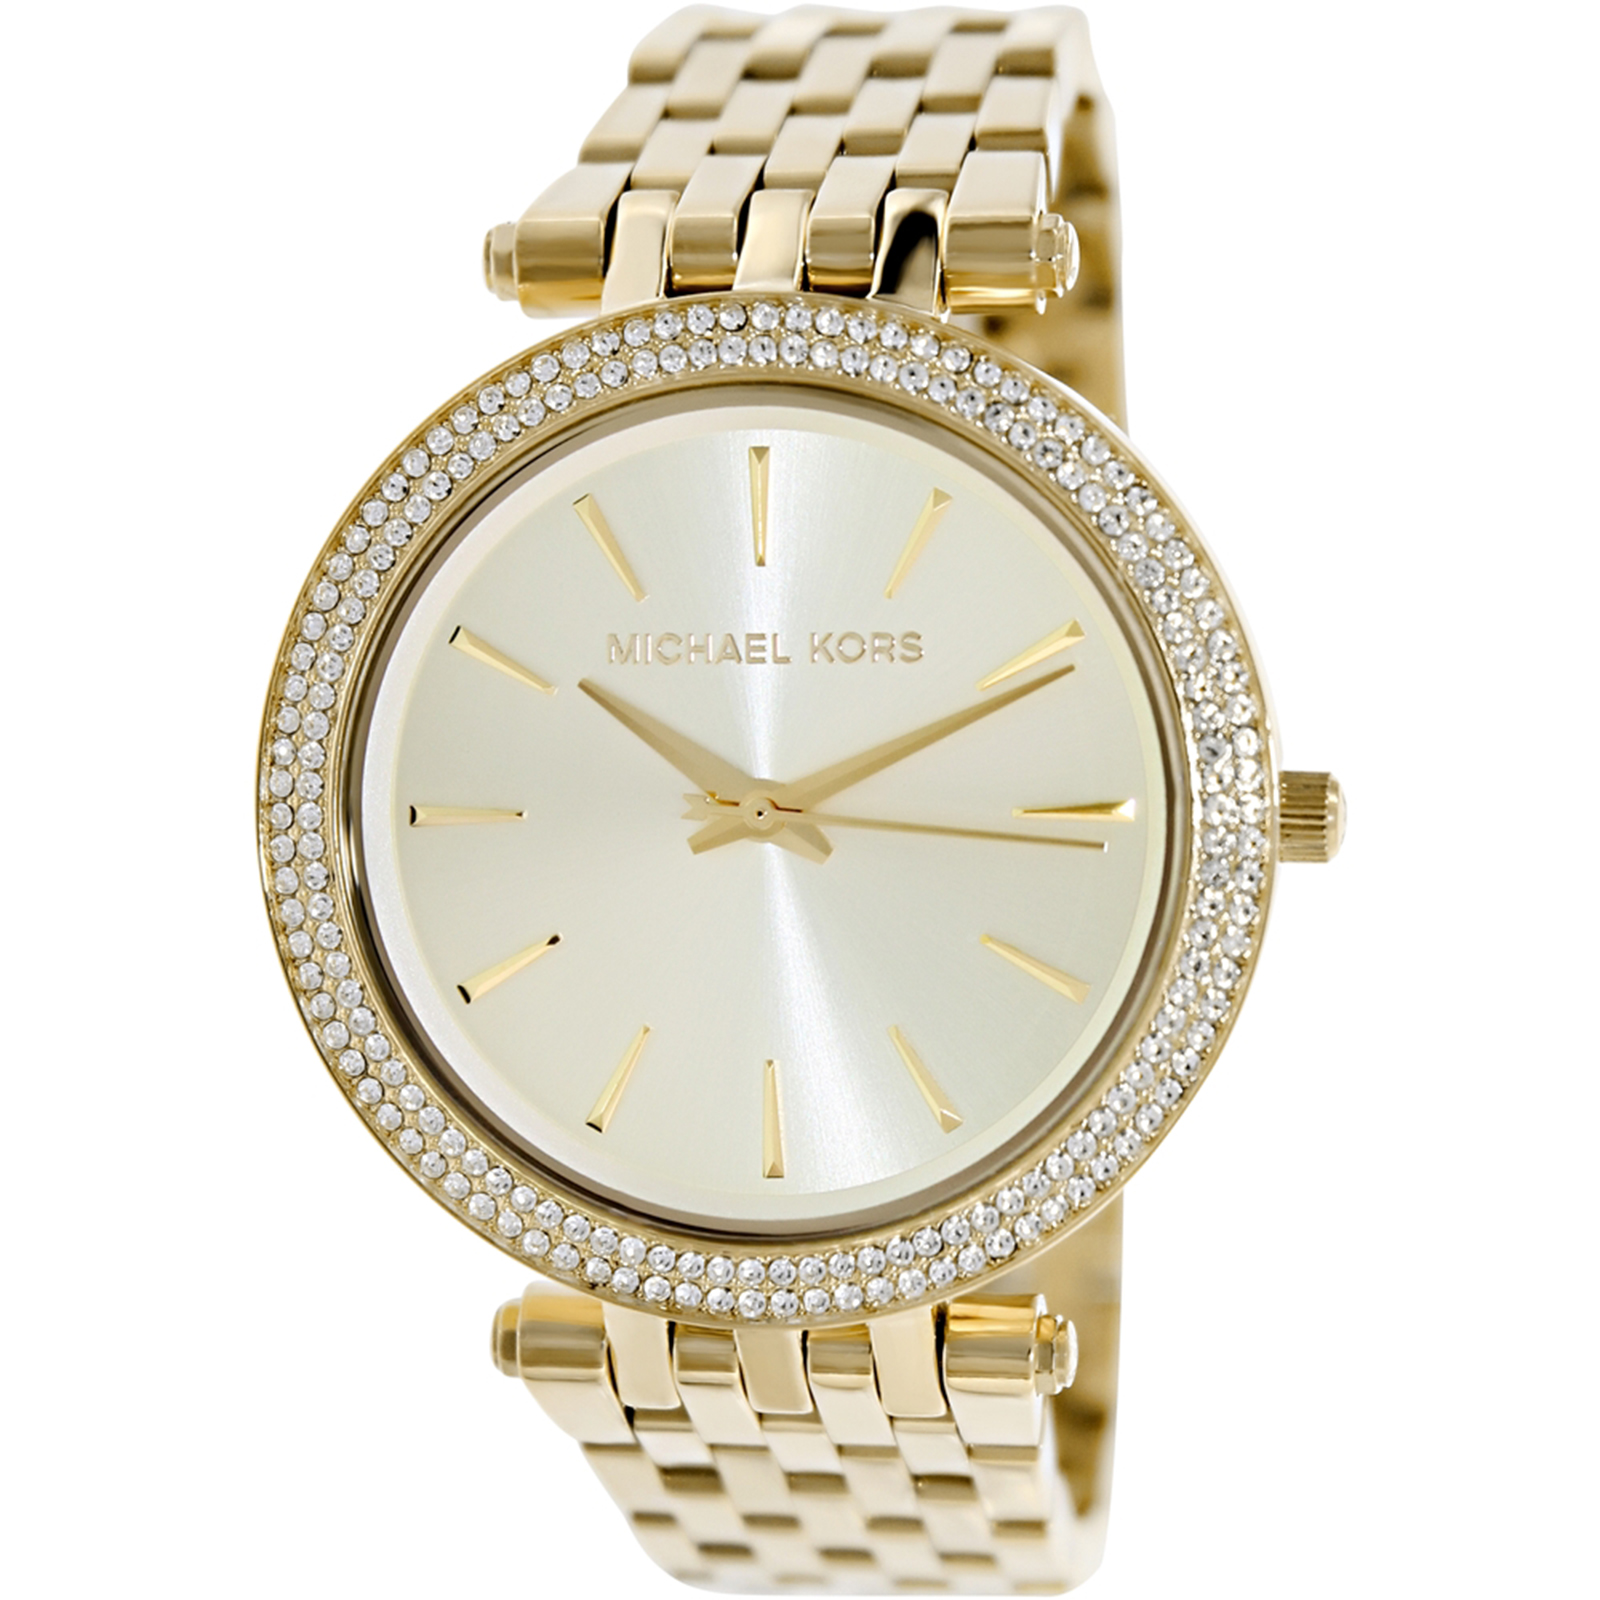 Michael Kors MK3191 Women’s Darci Glitz Stainless Steel Watch - Gold